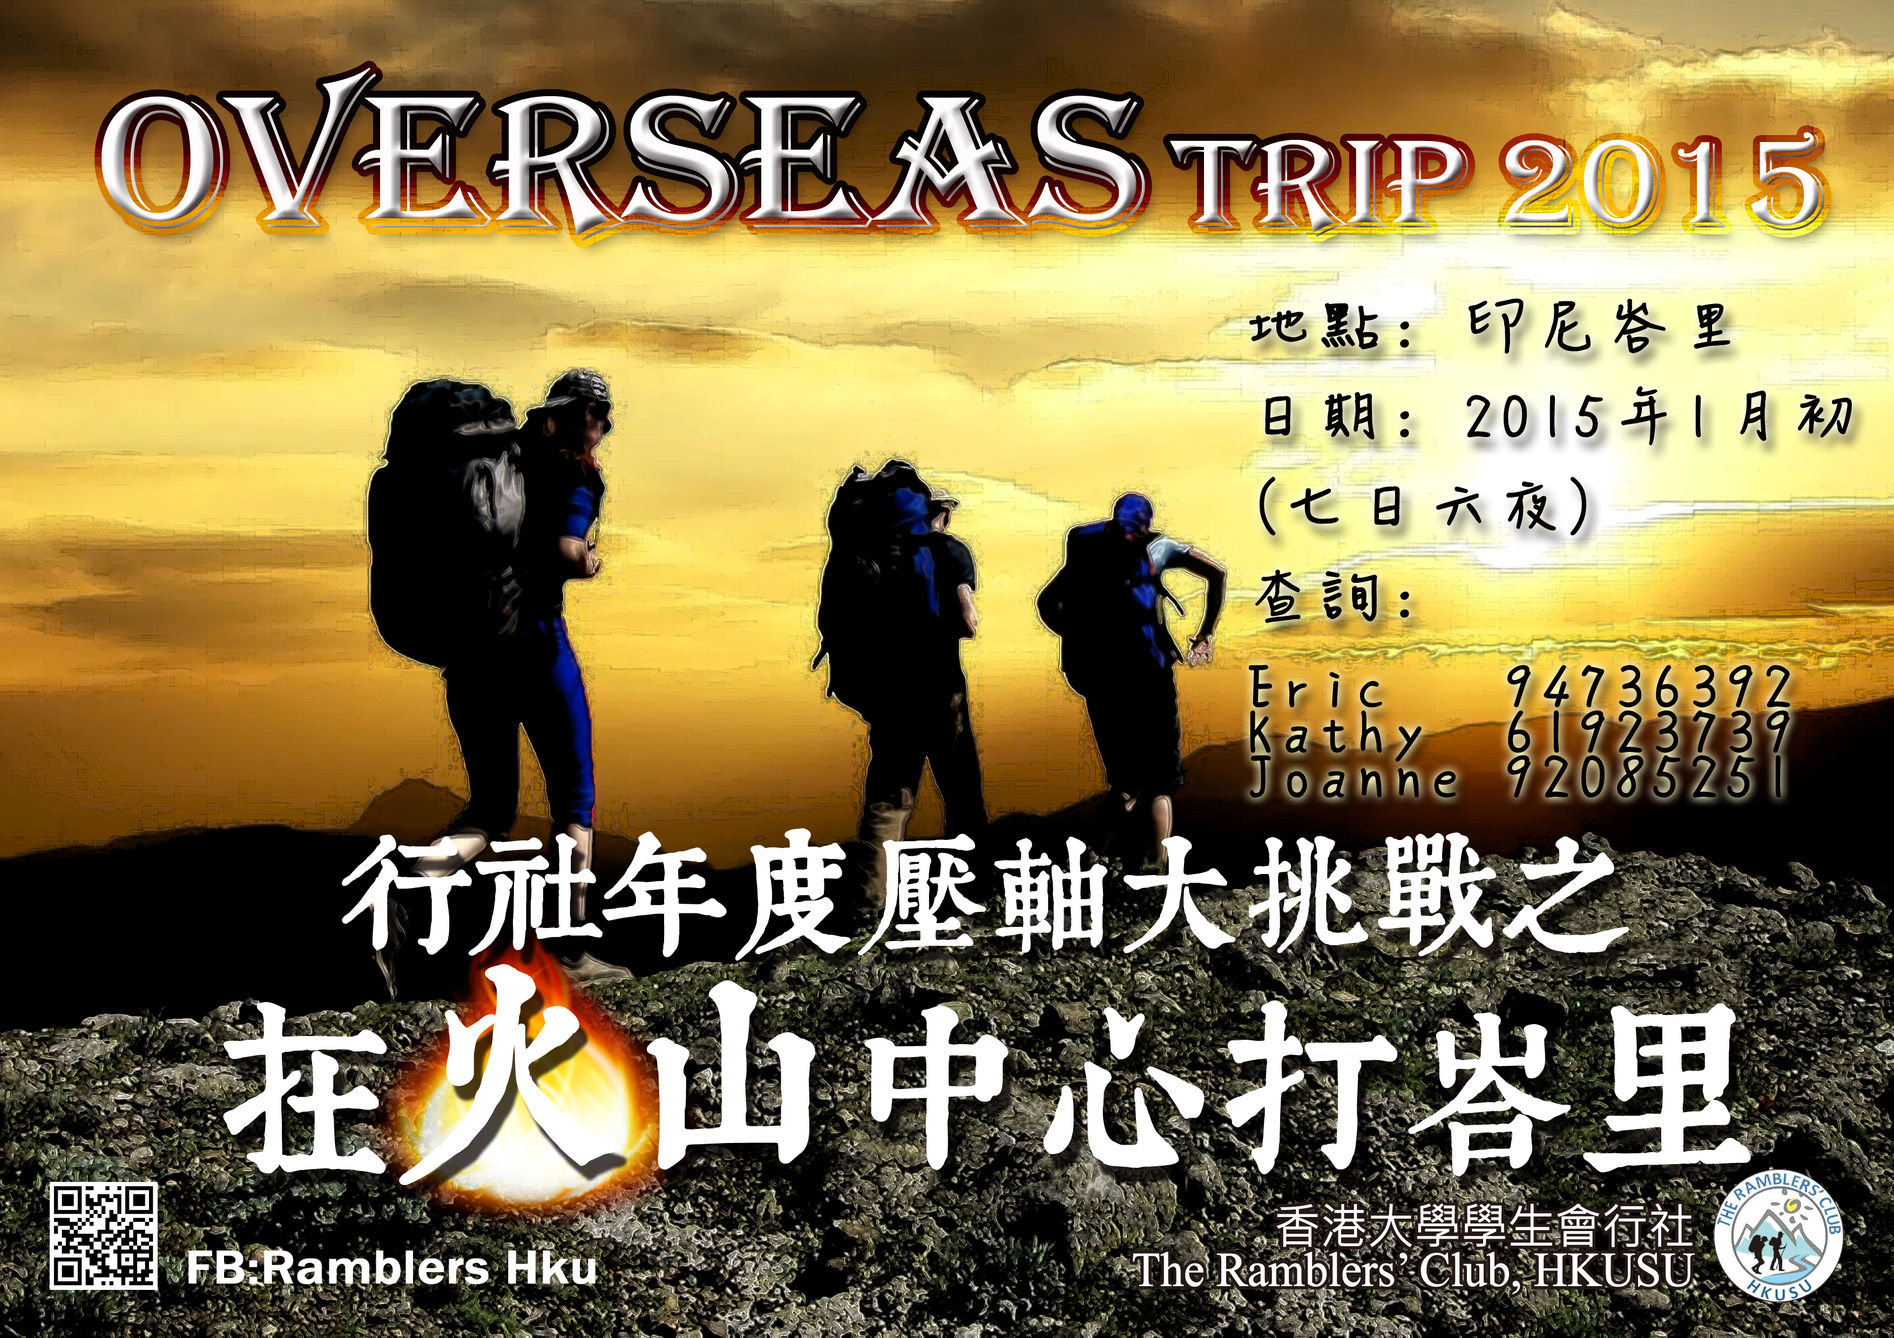 The Ramblers' Club, HKUSU 港大行社 - Overseas trip 2015 行社年度壓軸大挑戰之在火山打峇里